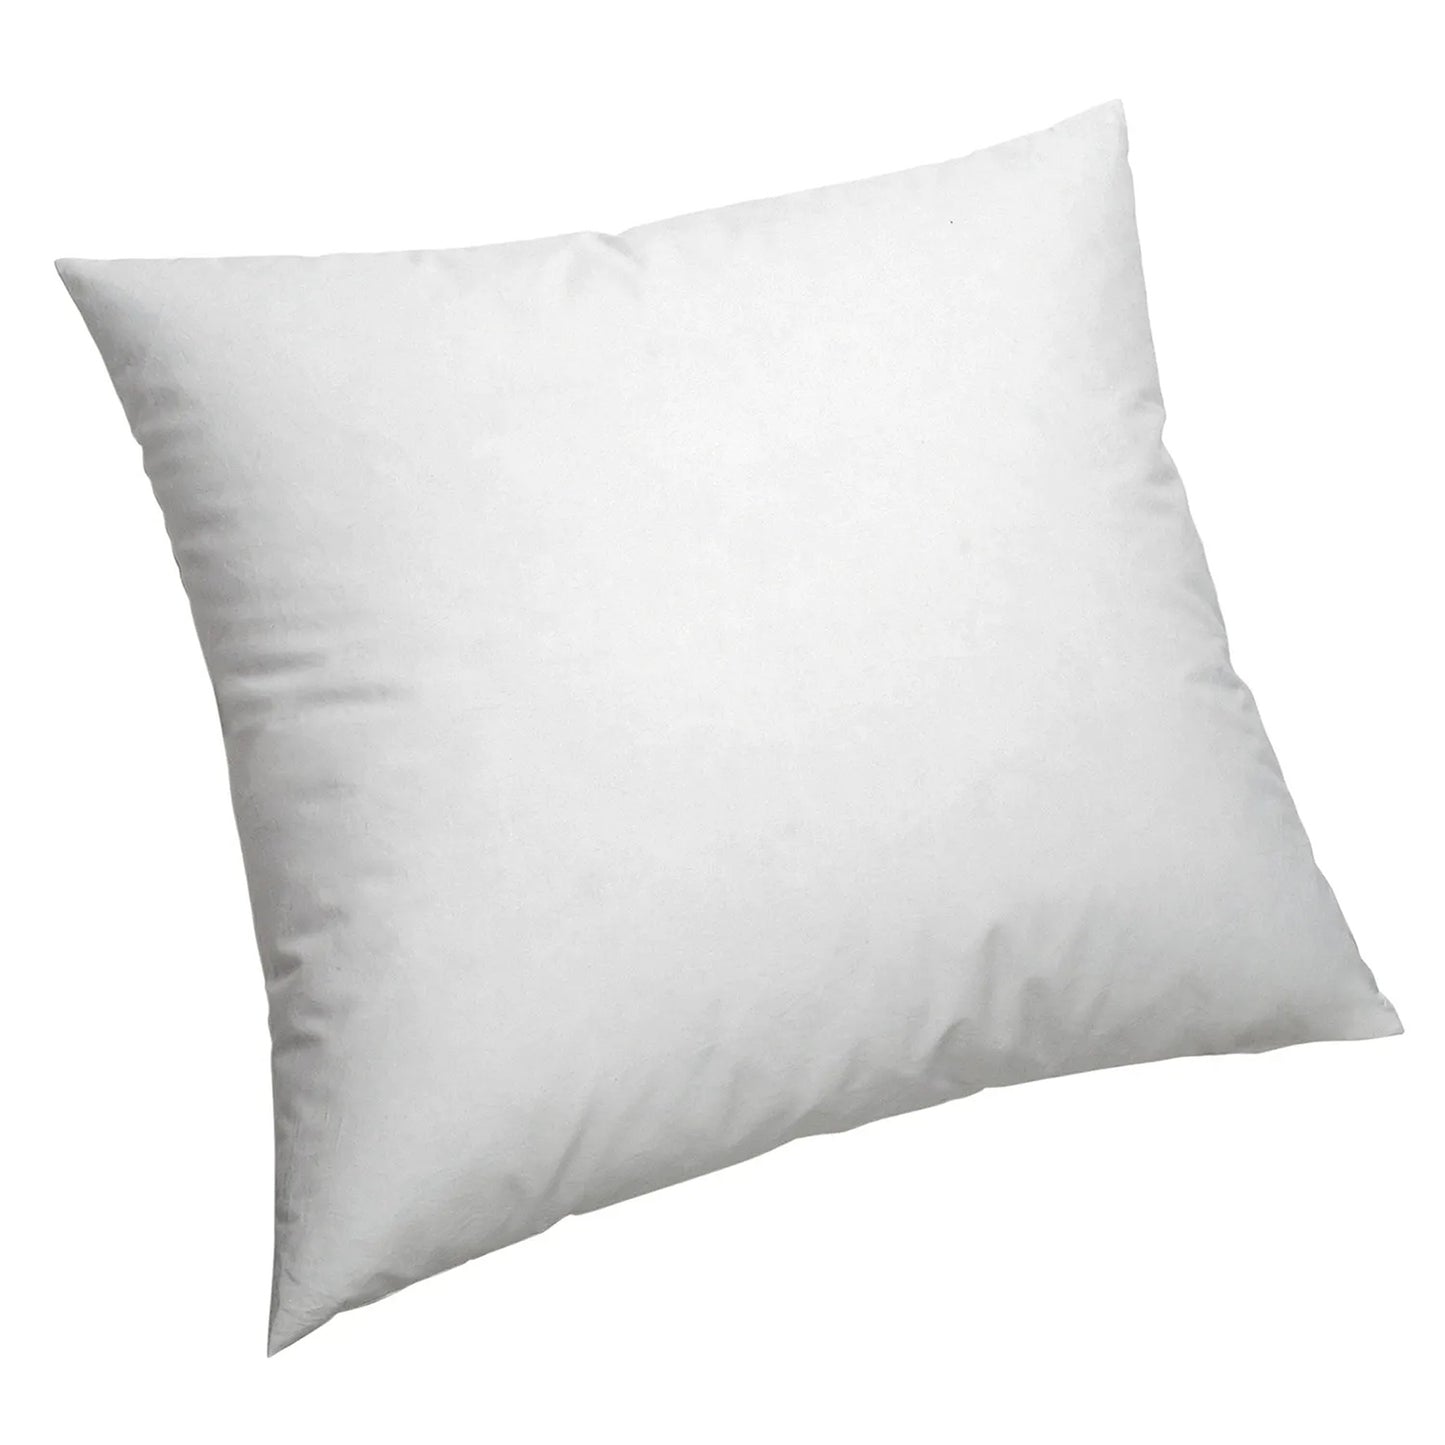 Aloe Vera Pillow